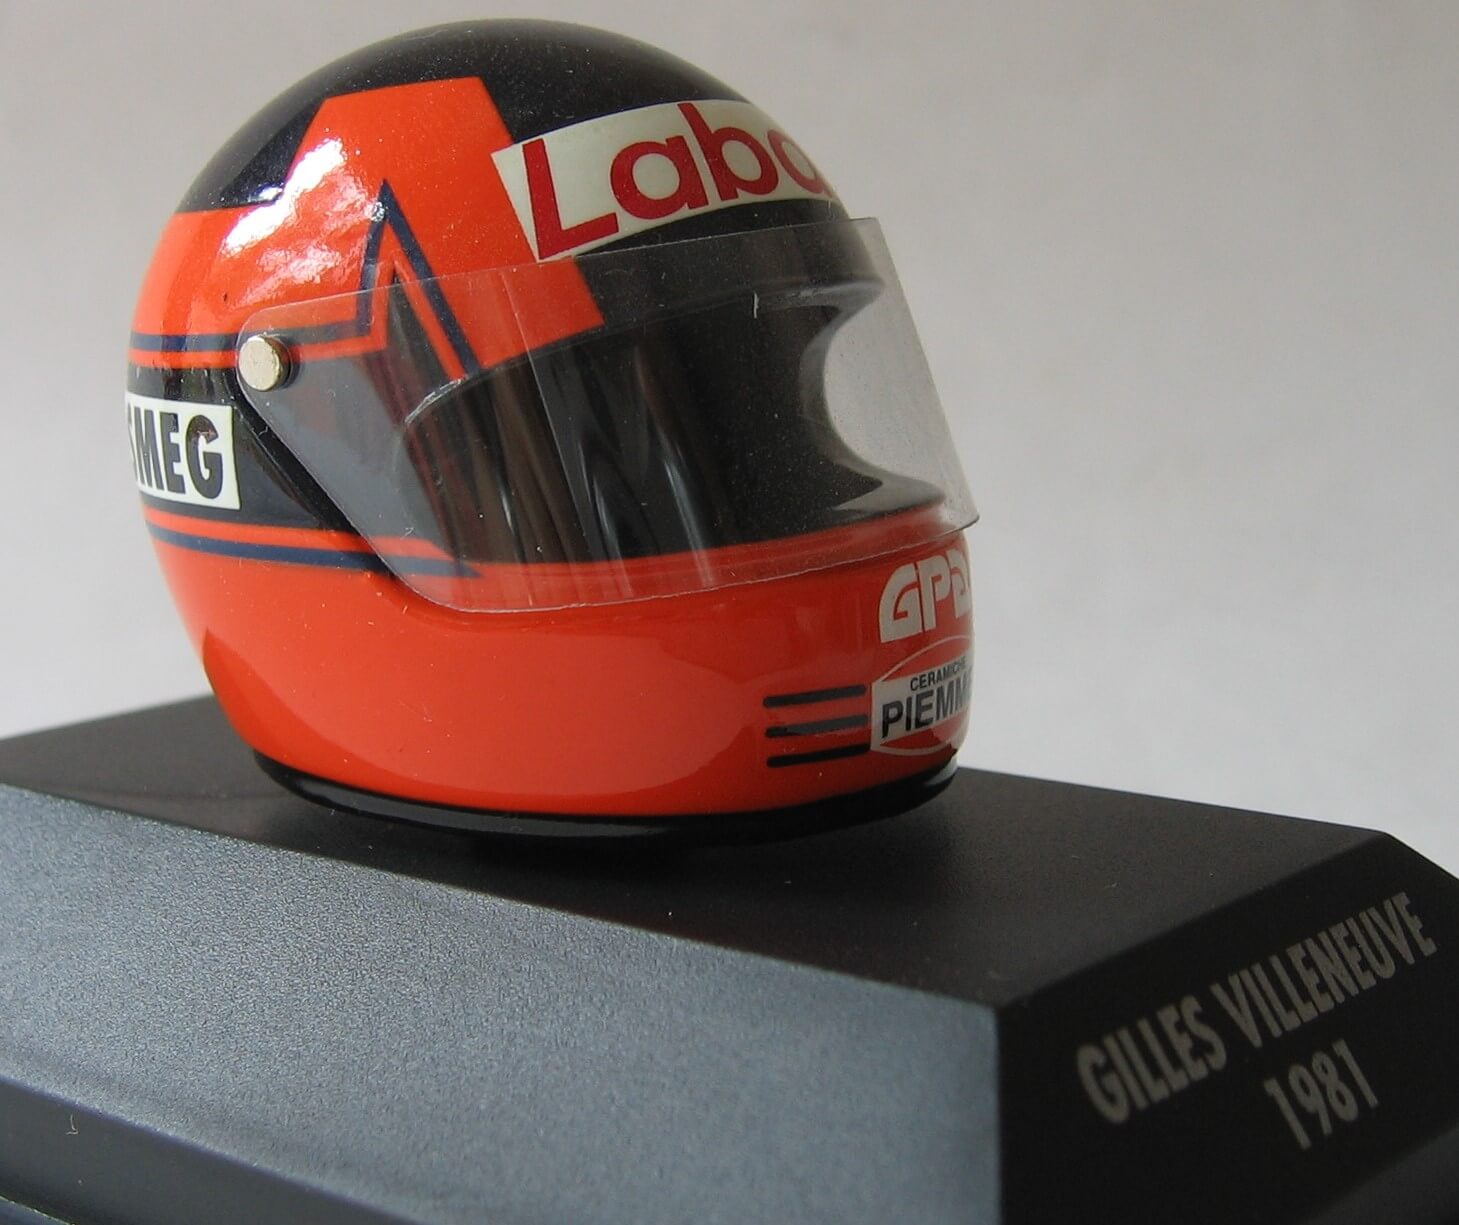 Gilles Villeneuve helmet